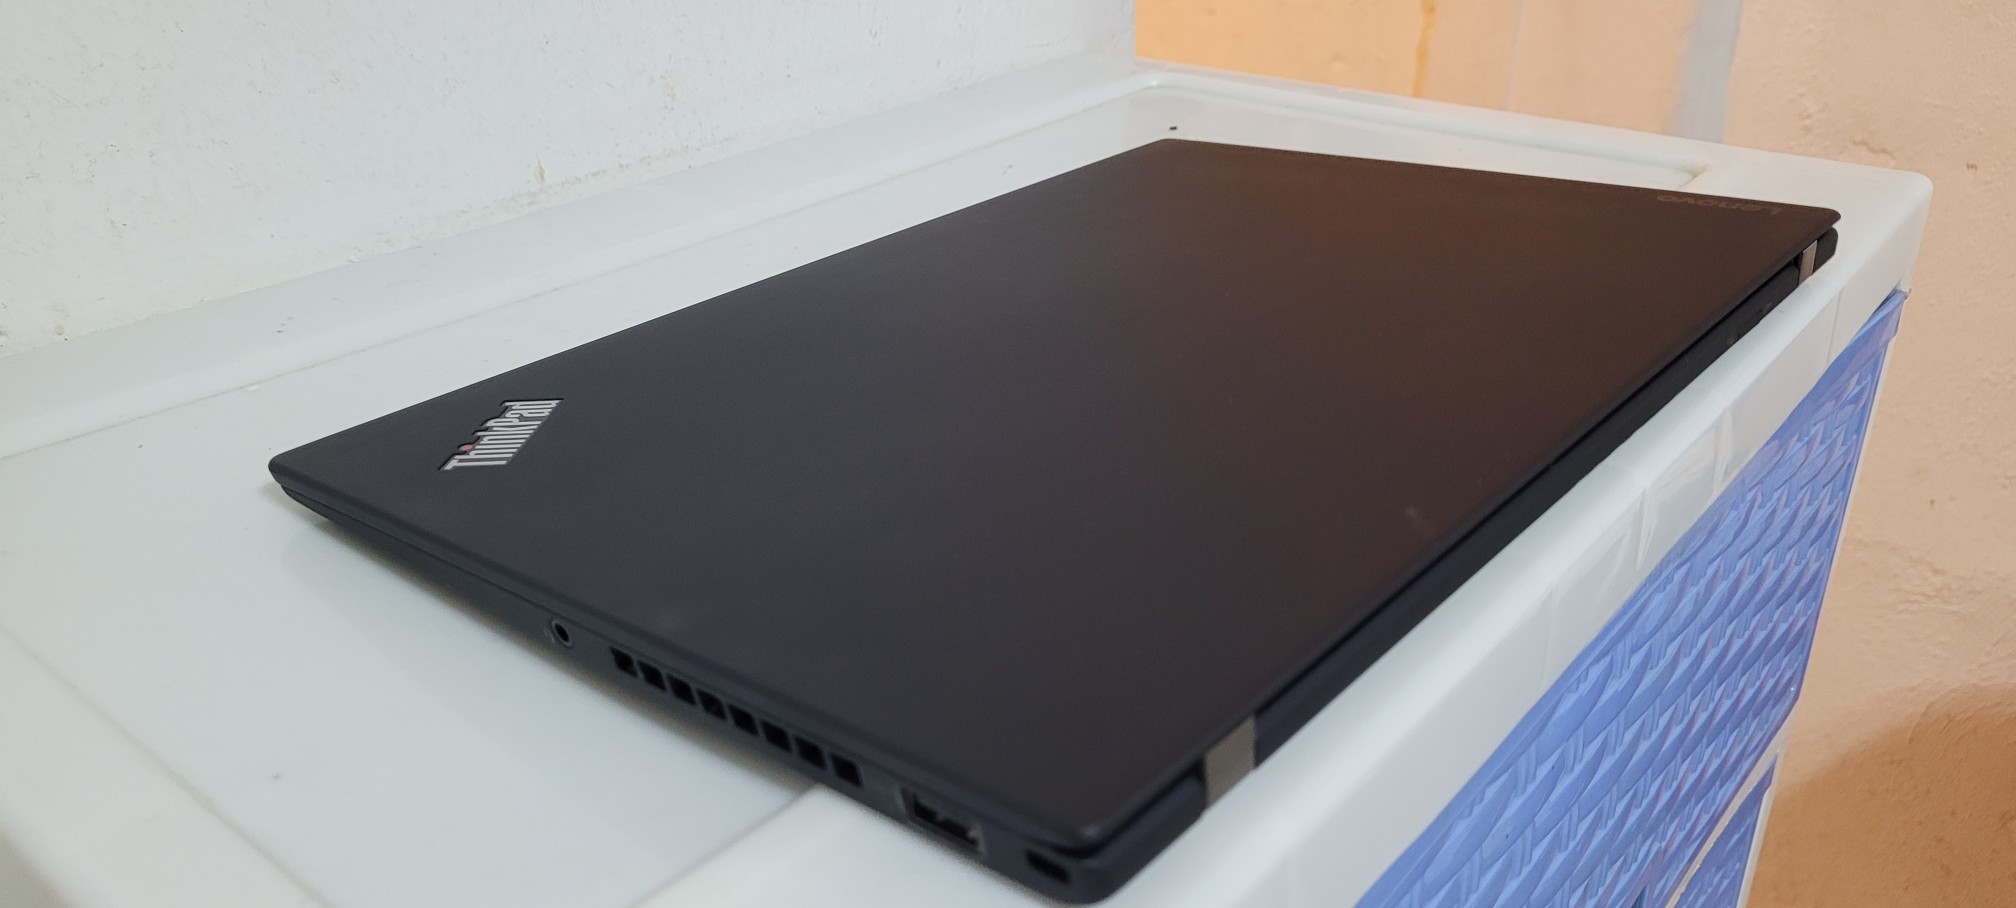 computadoras y laptops - Lenovo Touch t460s 14 Pulg Core i7 2.81ghz Ram 12gb ddr4 Disco 256gb Video 6gb 2